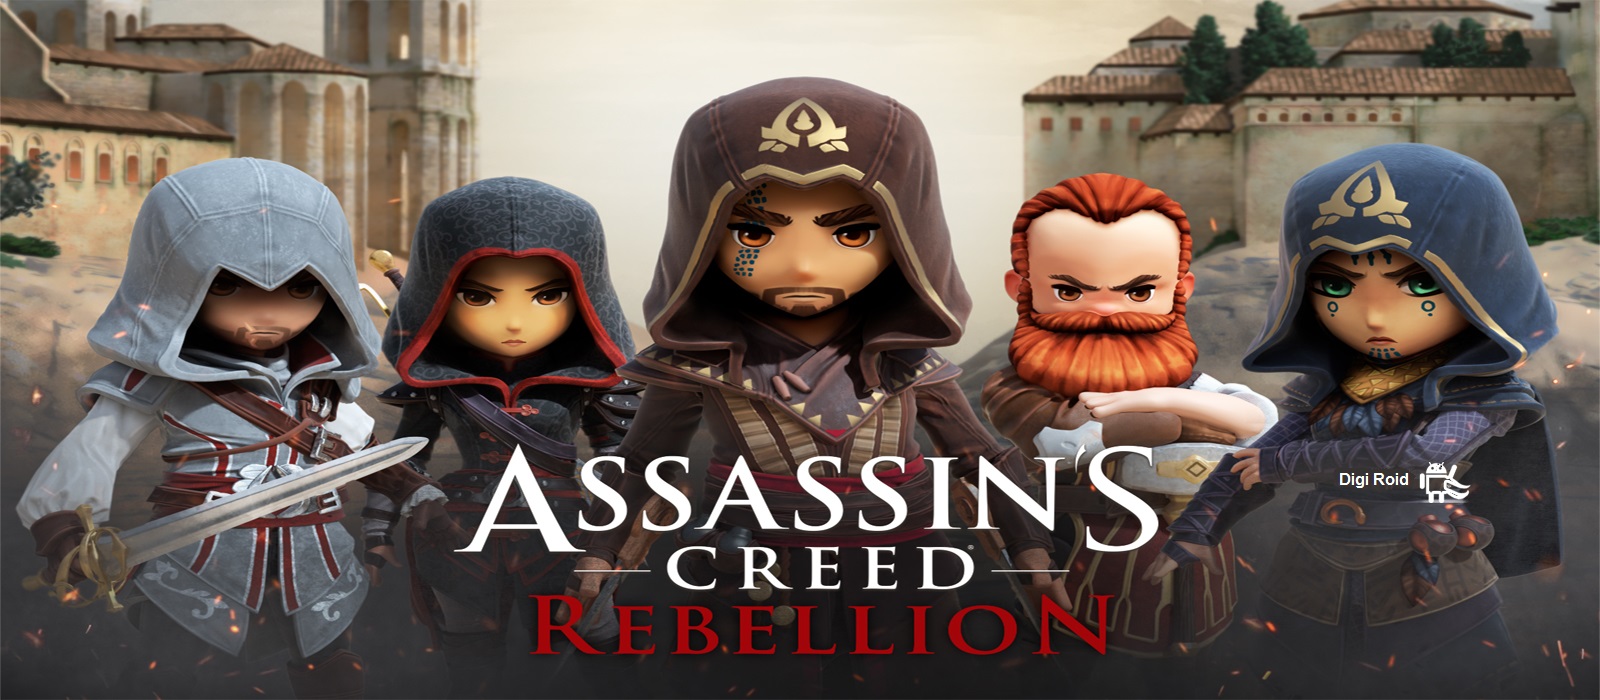 4kev_assassins-creed-rebellion-cover.jpg